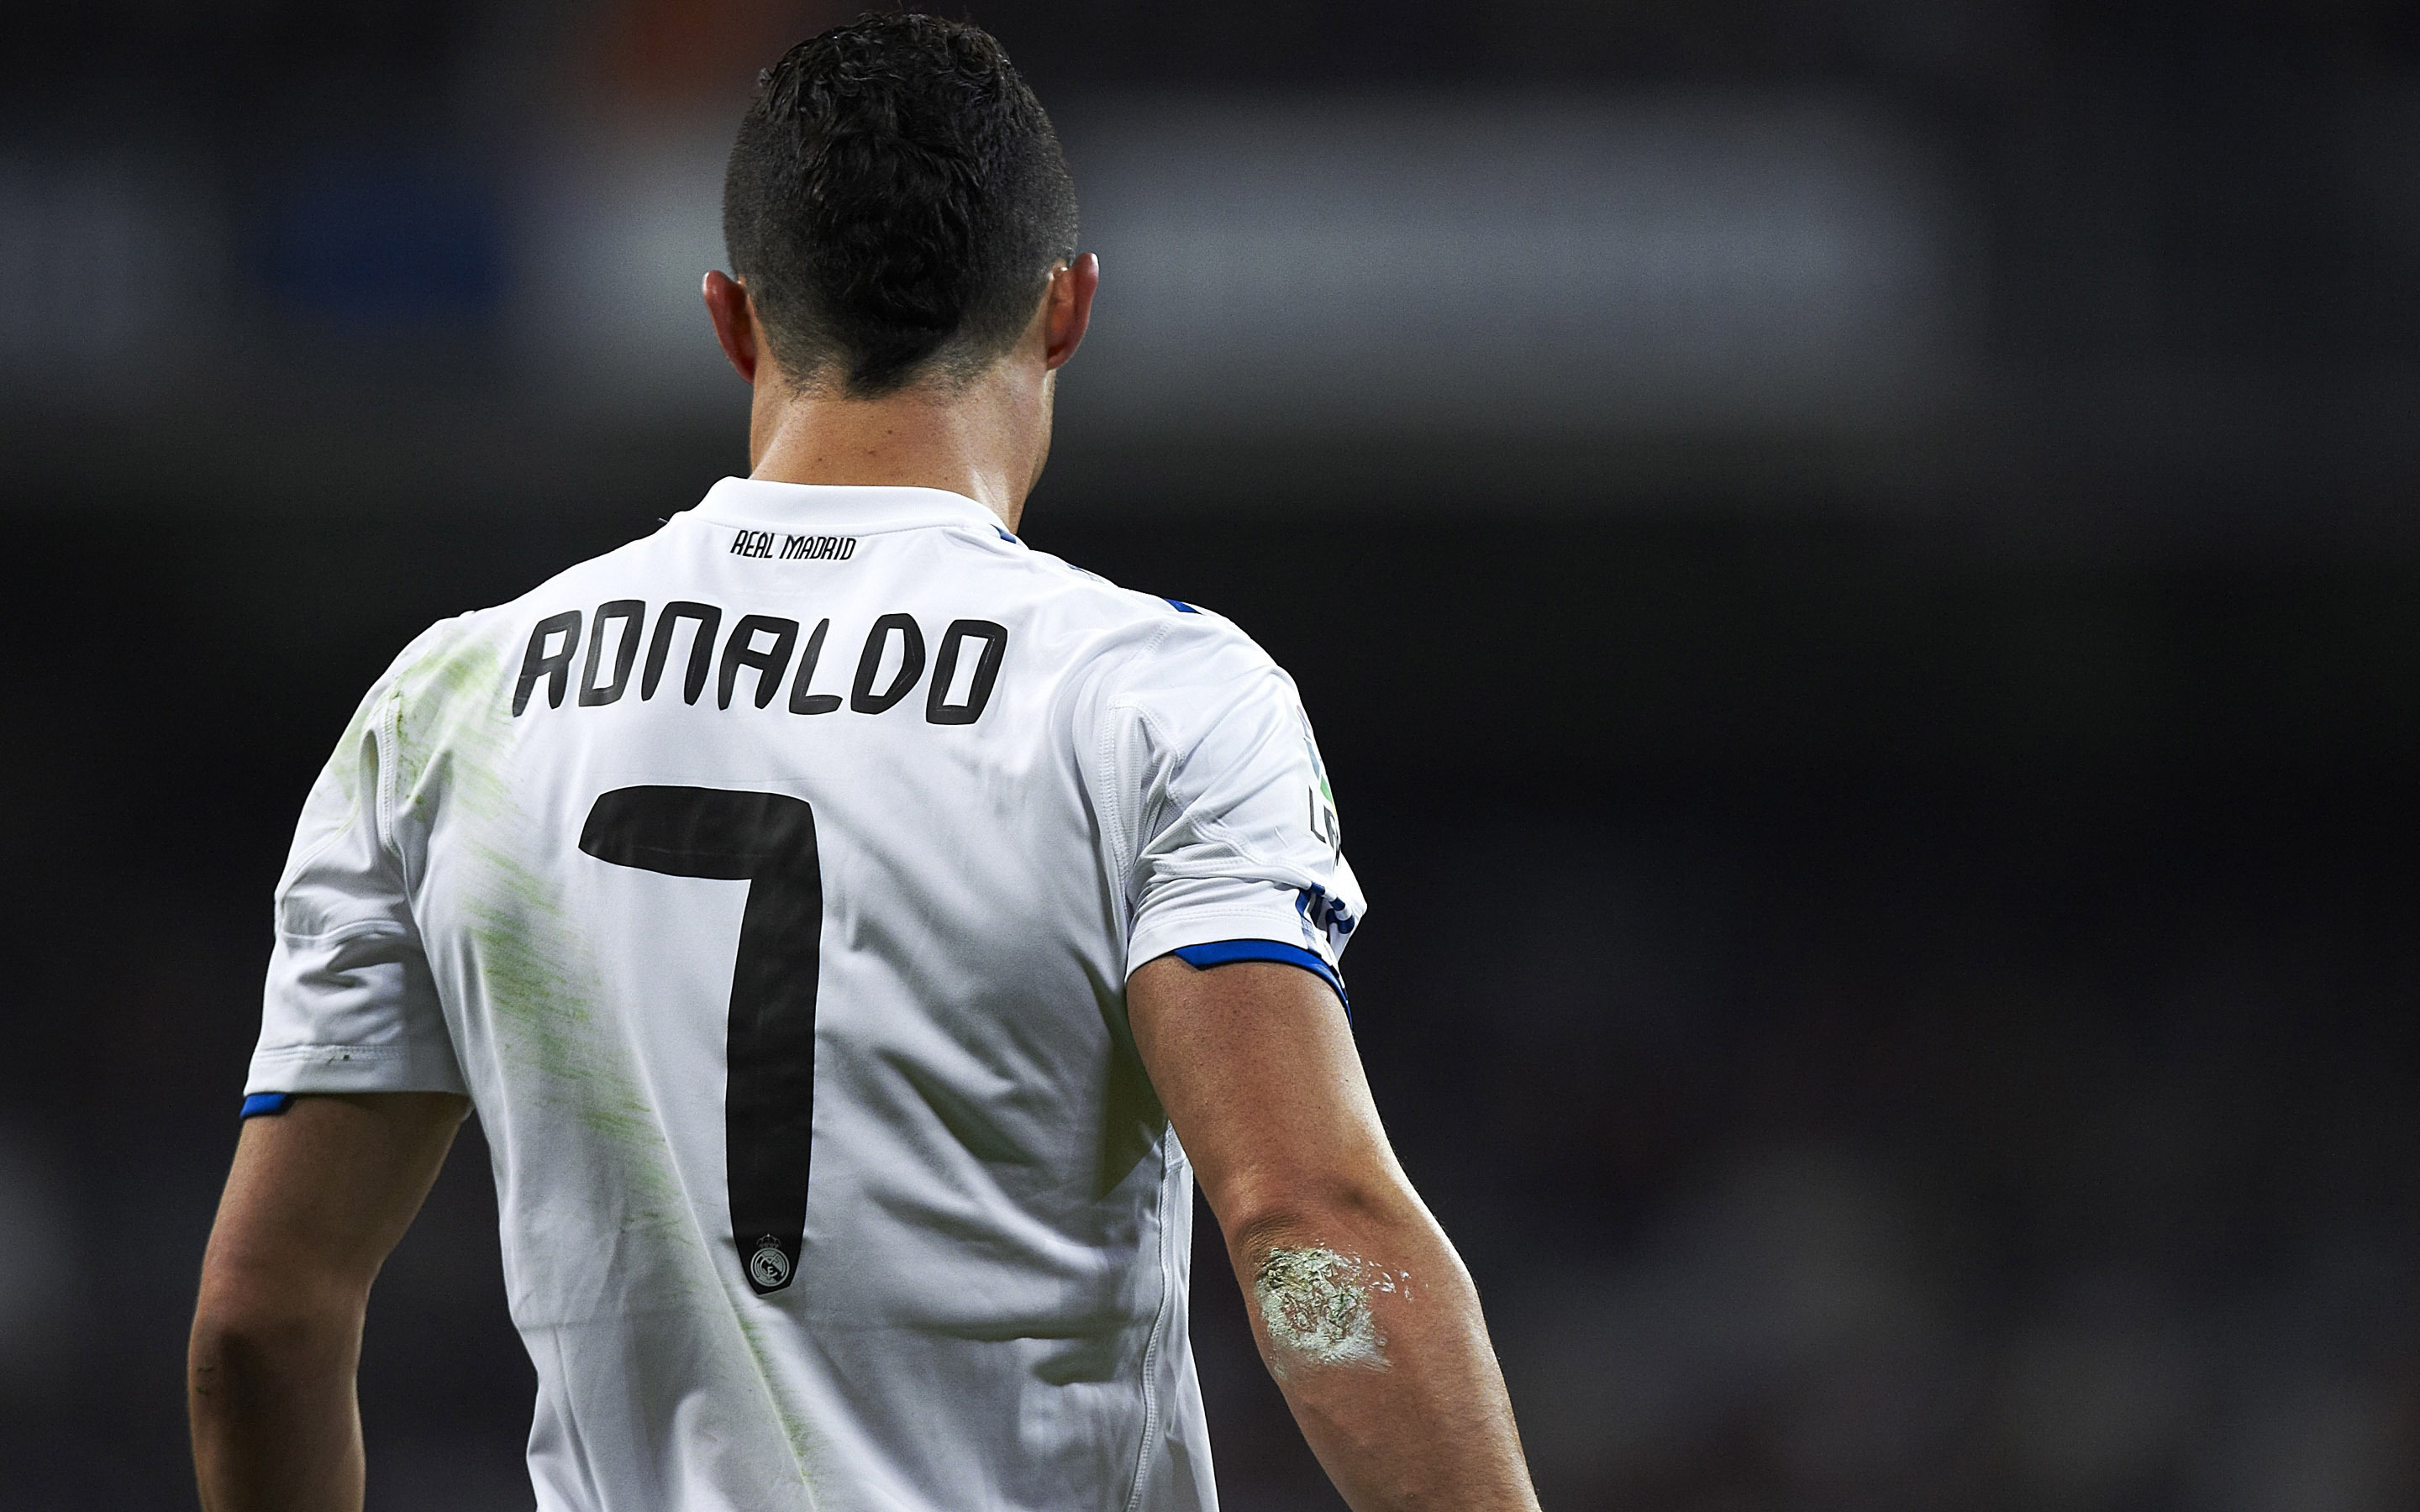 Christiano Ronaldo Wallpaper HD - Soccer Desktop